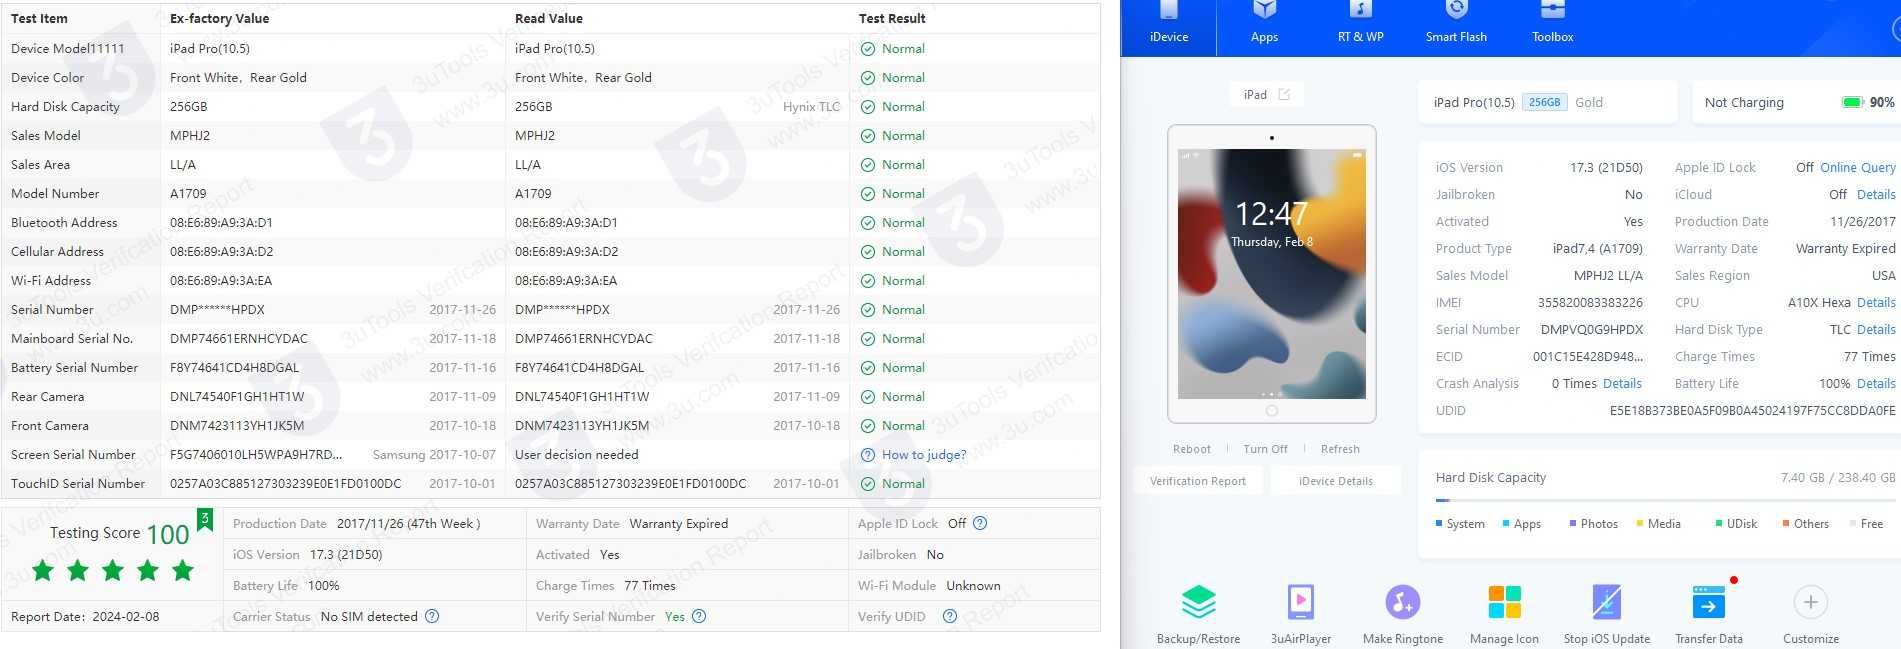 Apple iPad Pro 10.5 Wi-Fi + Cellular 256GB Space Grey (MPHG2) A1709